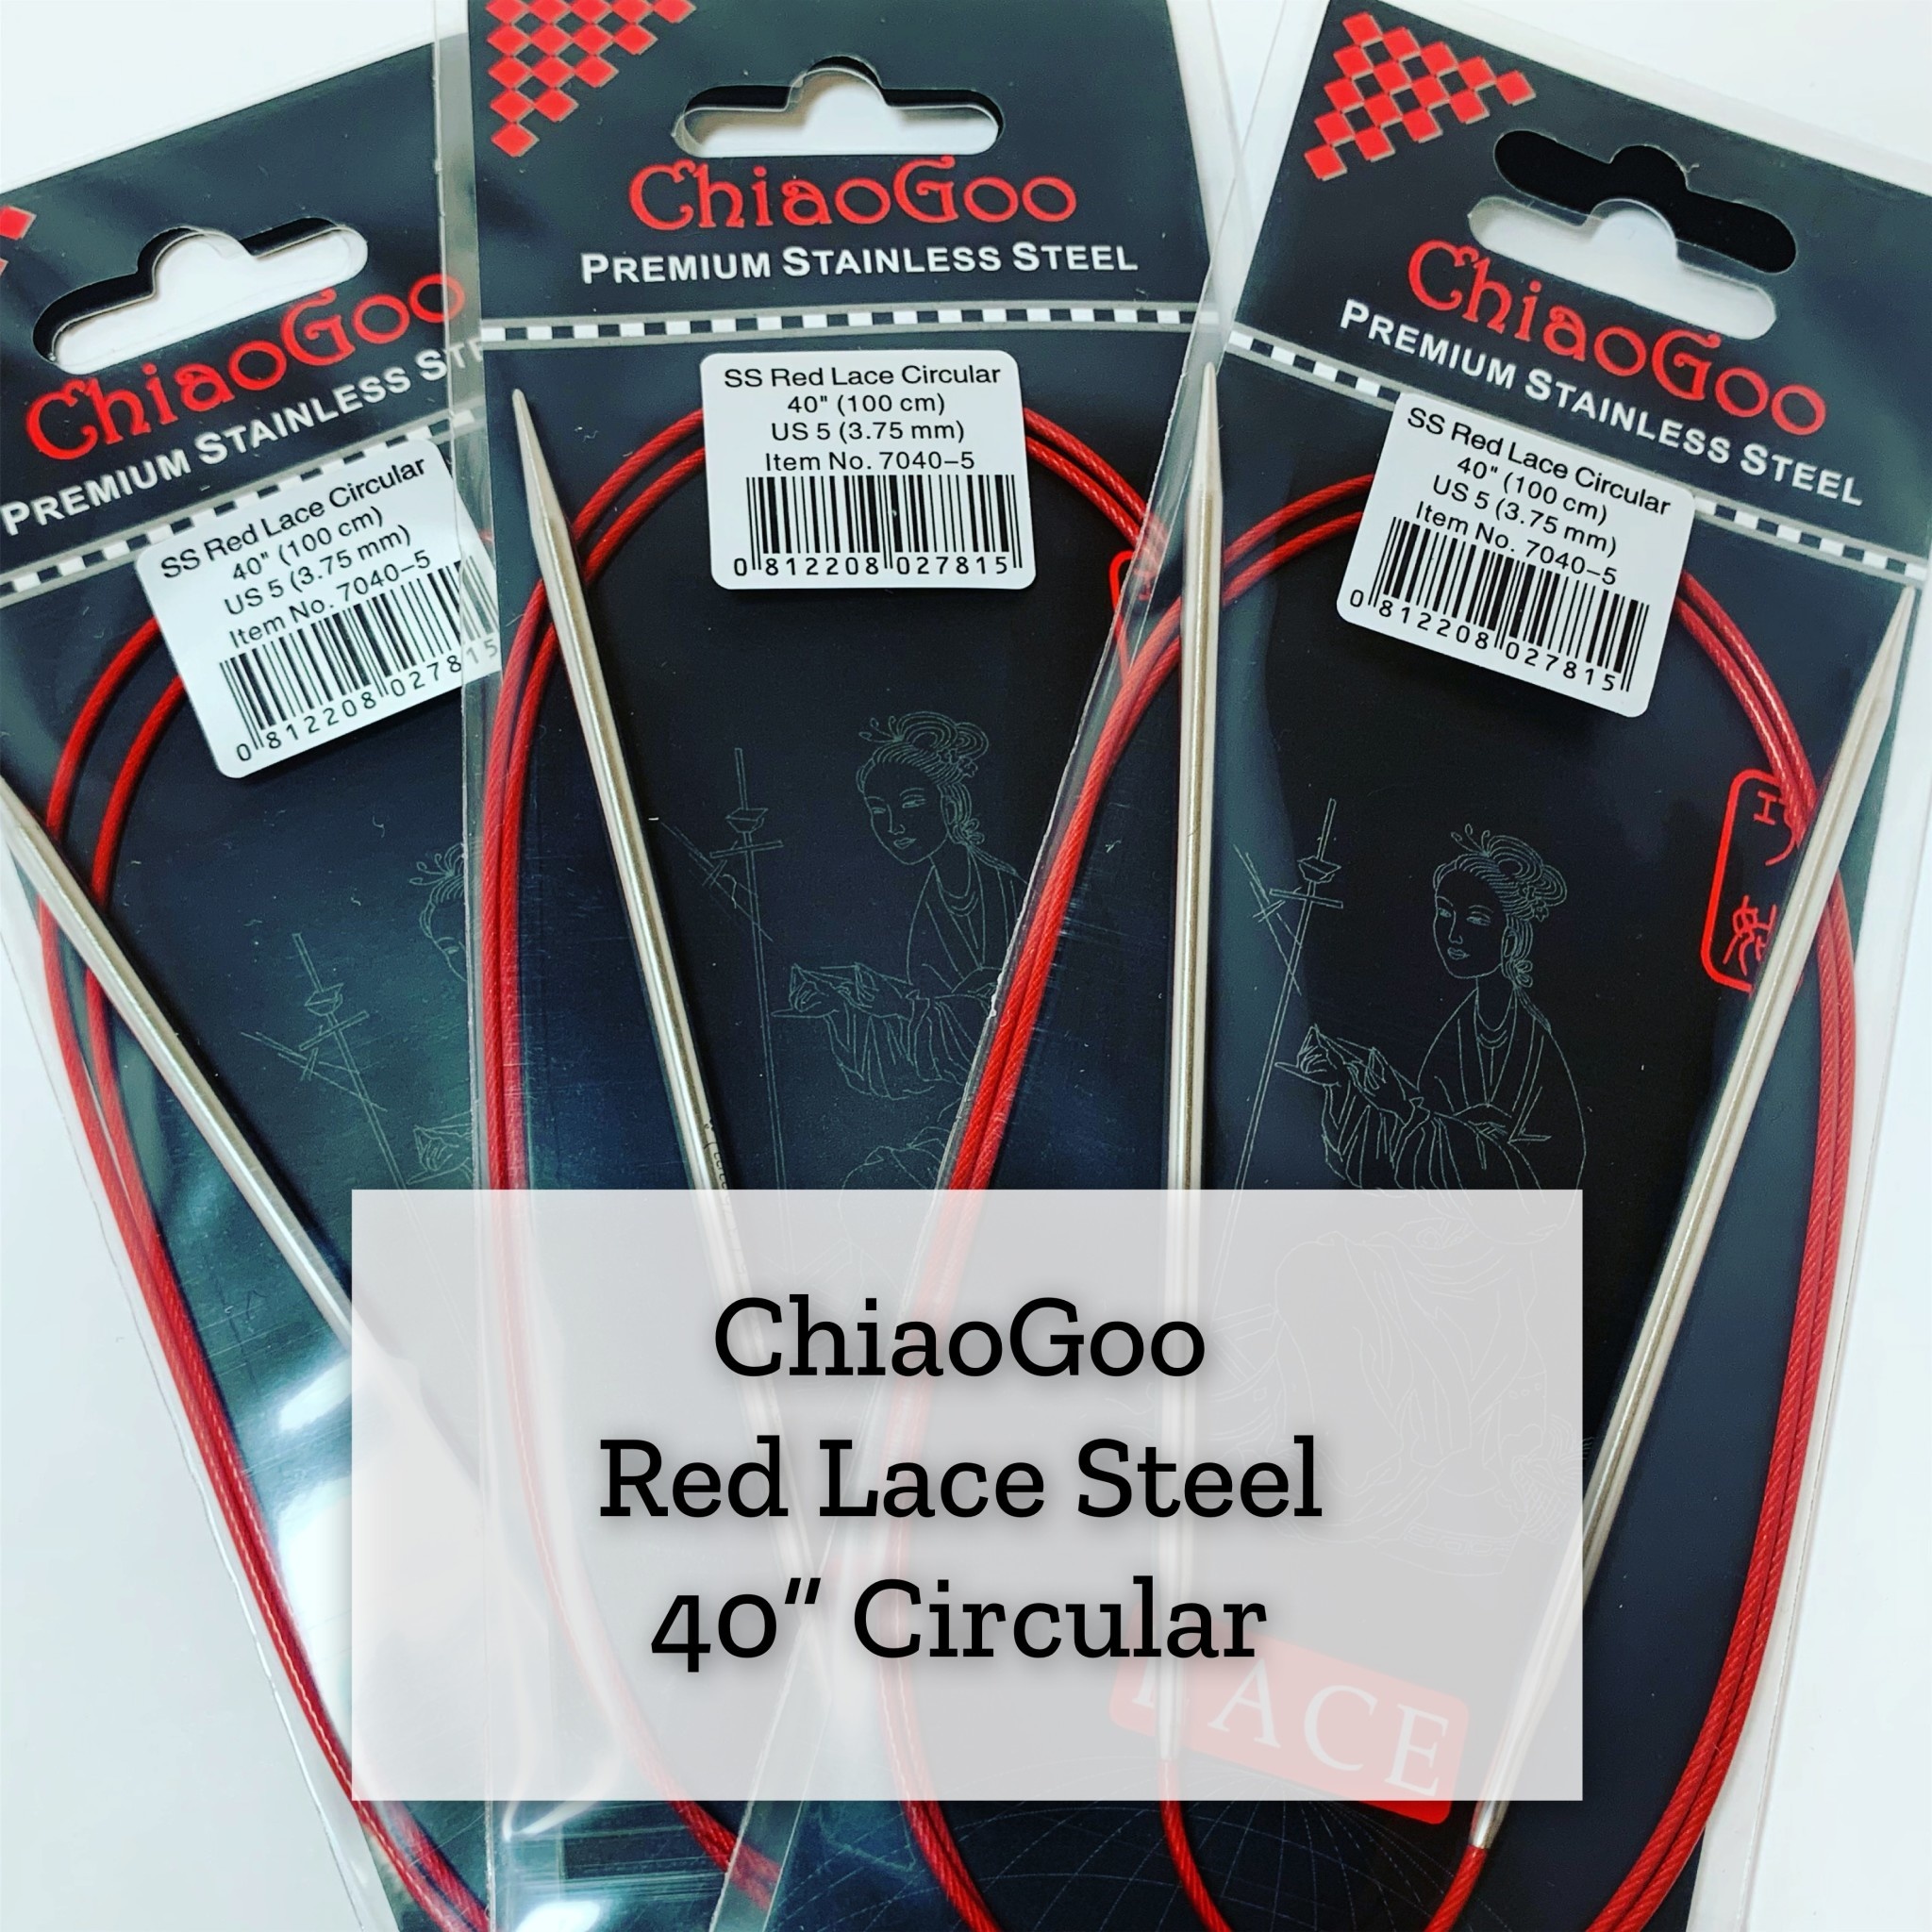 ChiaoGoo Red Lace Steel - 40" 2 mm